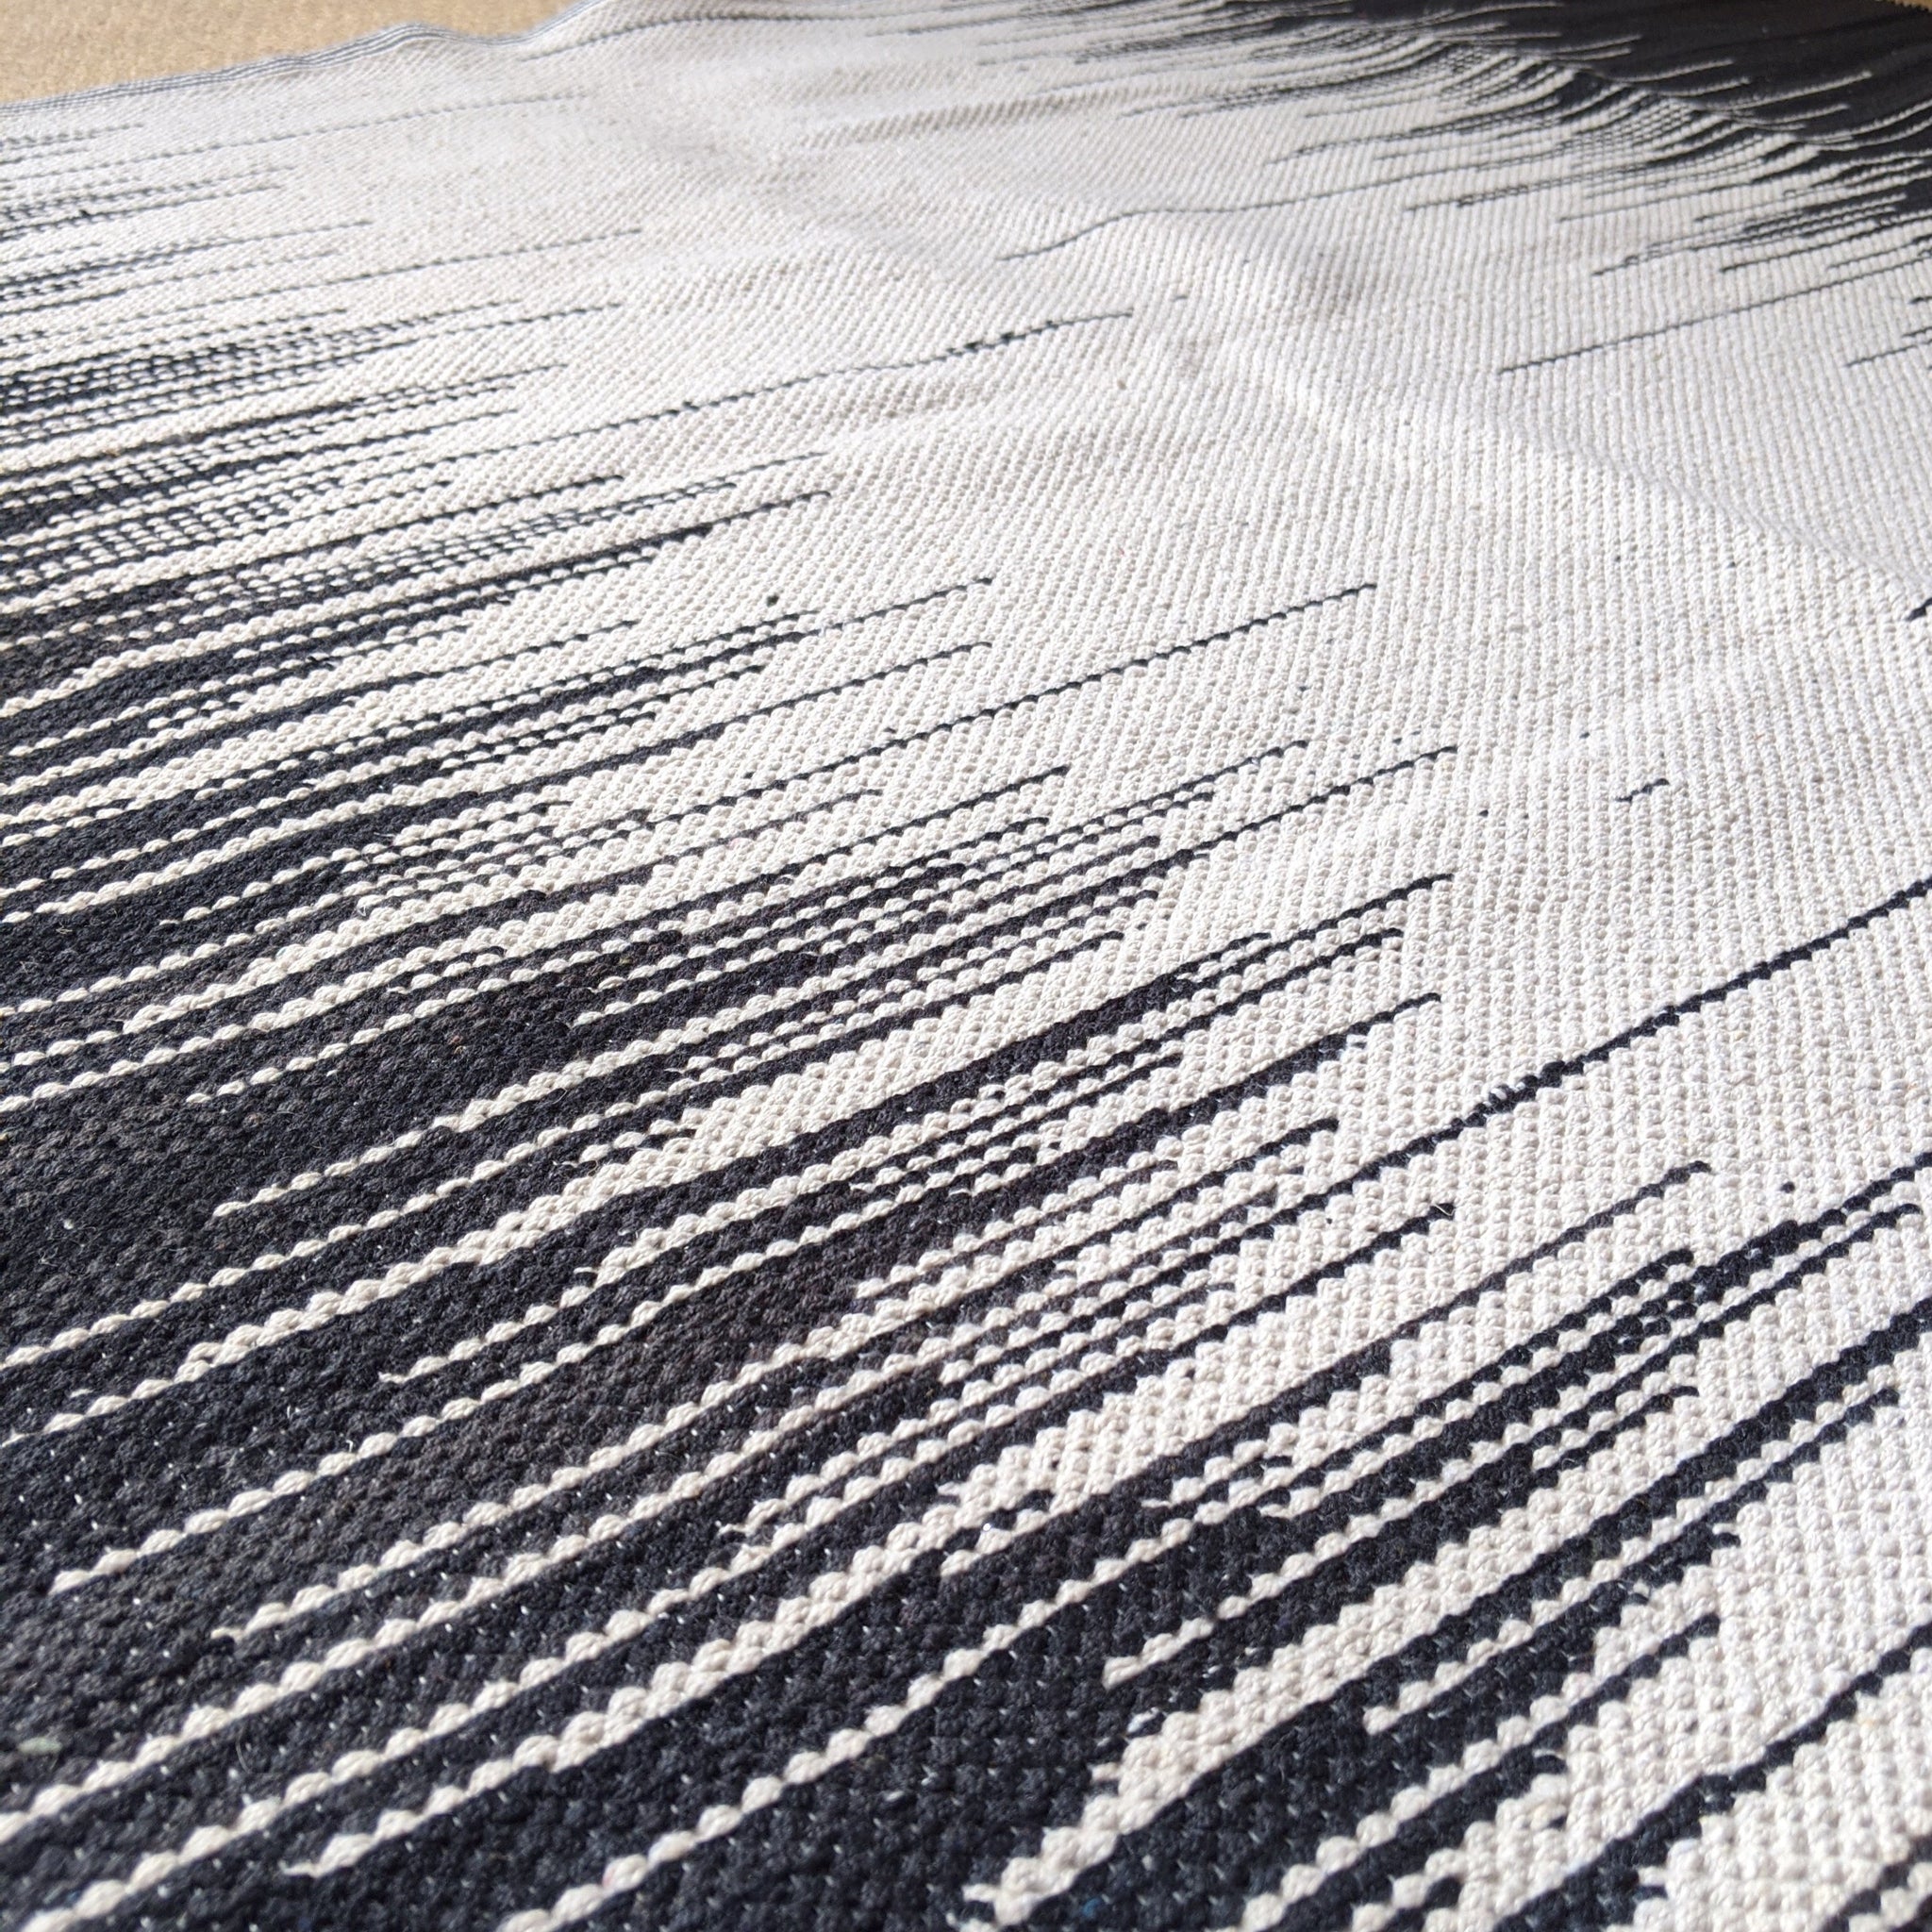 New 160x230cm Black & Cream INDIAN COTTON Aztec Design HAND WOVEN Carpet Rug Runner